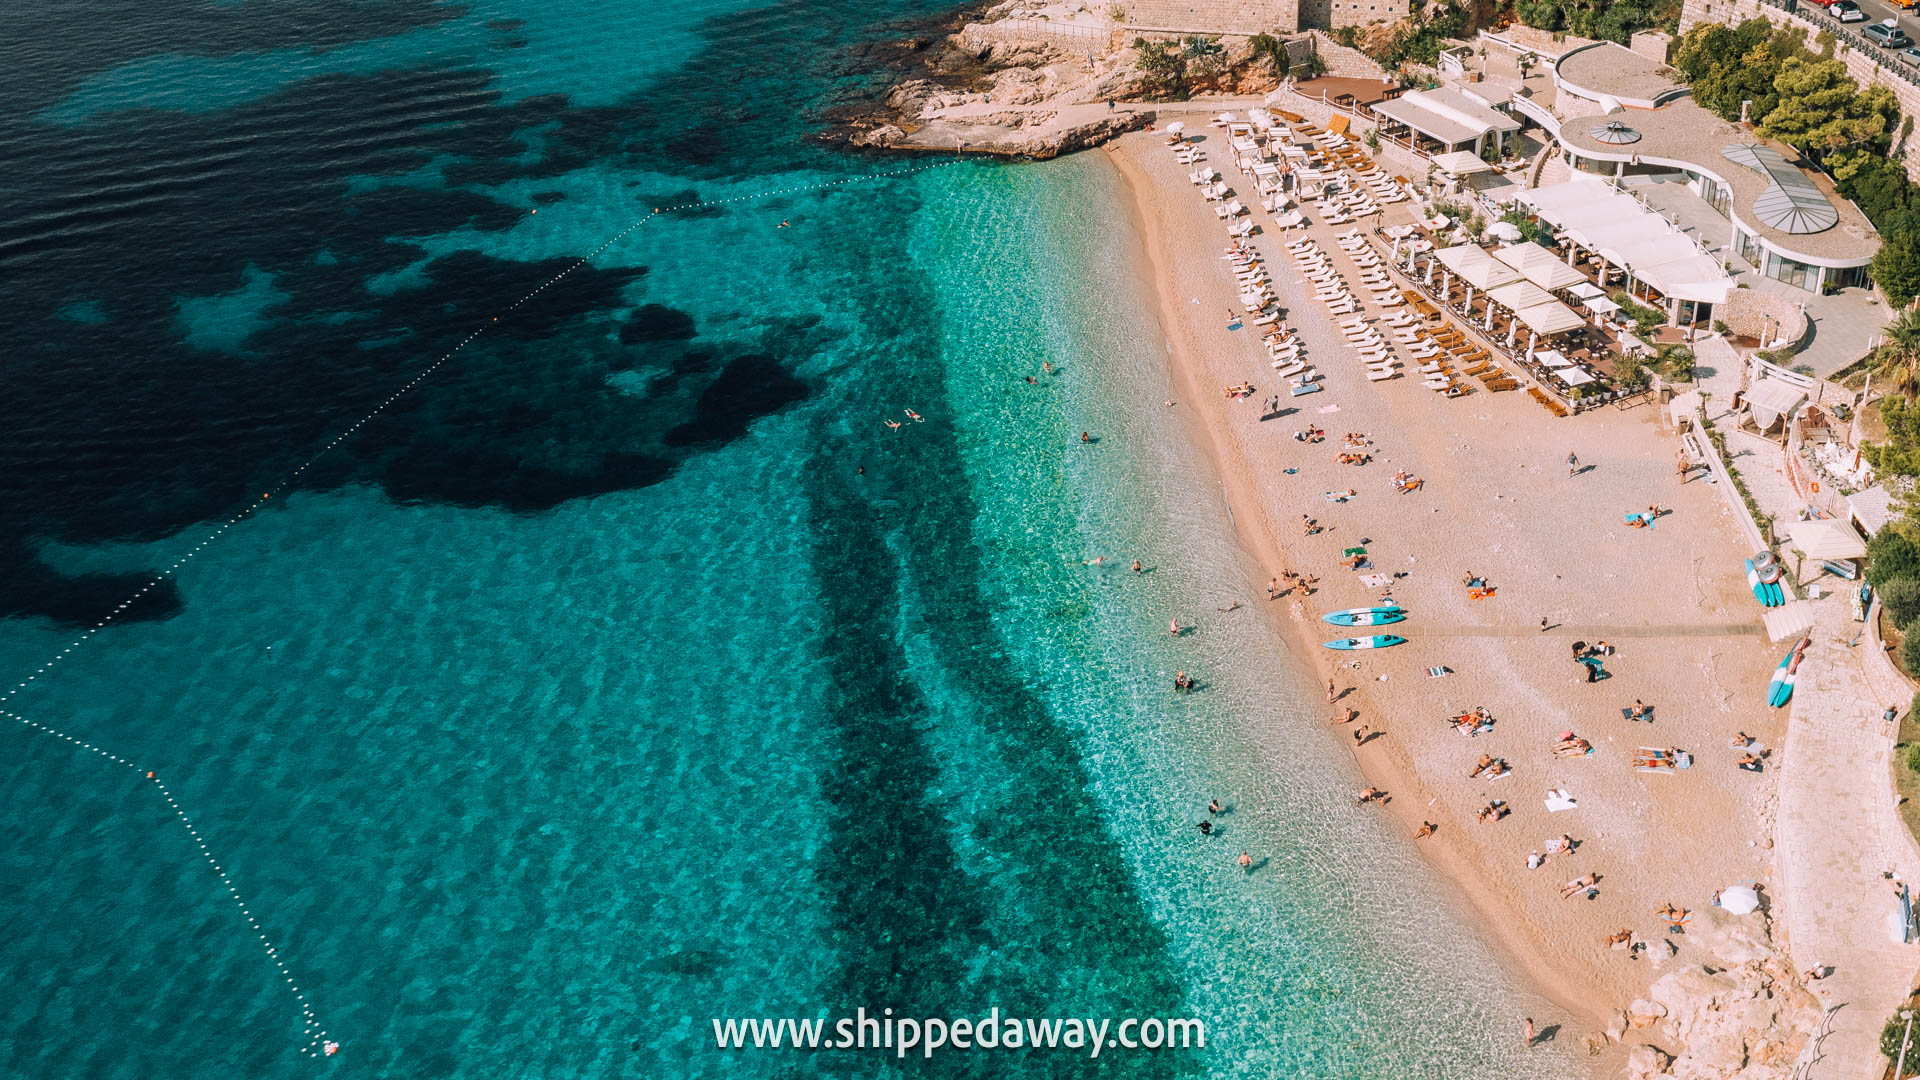 Best Dubrovnik Beaches - Dubrovnik Beaches - Best Beaches in Dubrovnik - Dubrovnik Beaches Guide - Best Beaches in Dubrovnik as recommended by a local